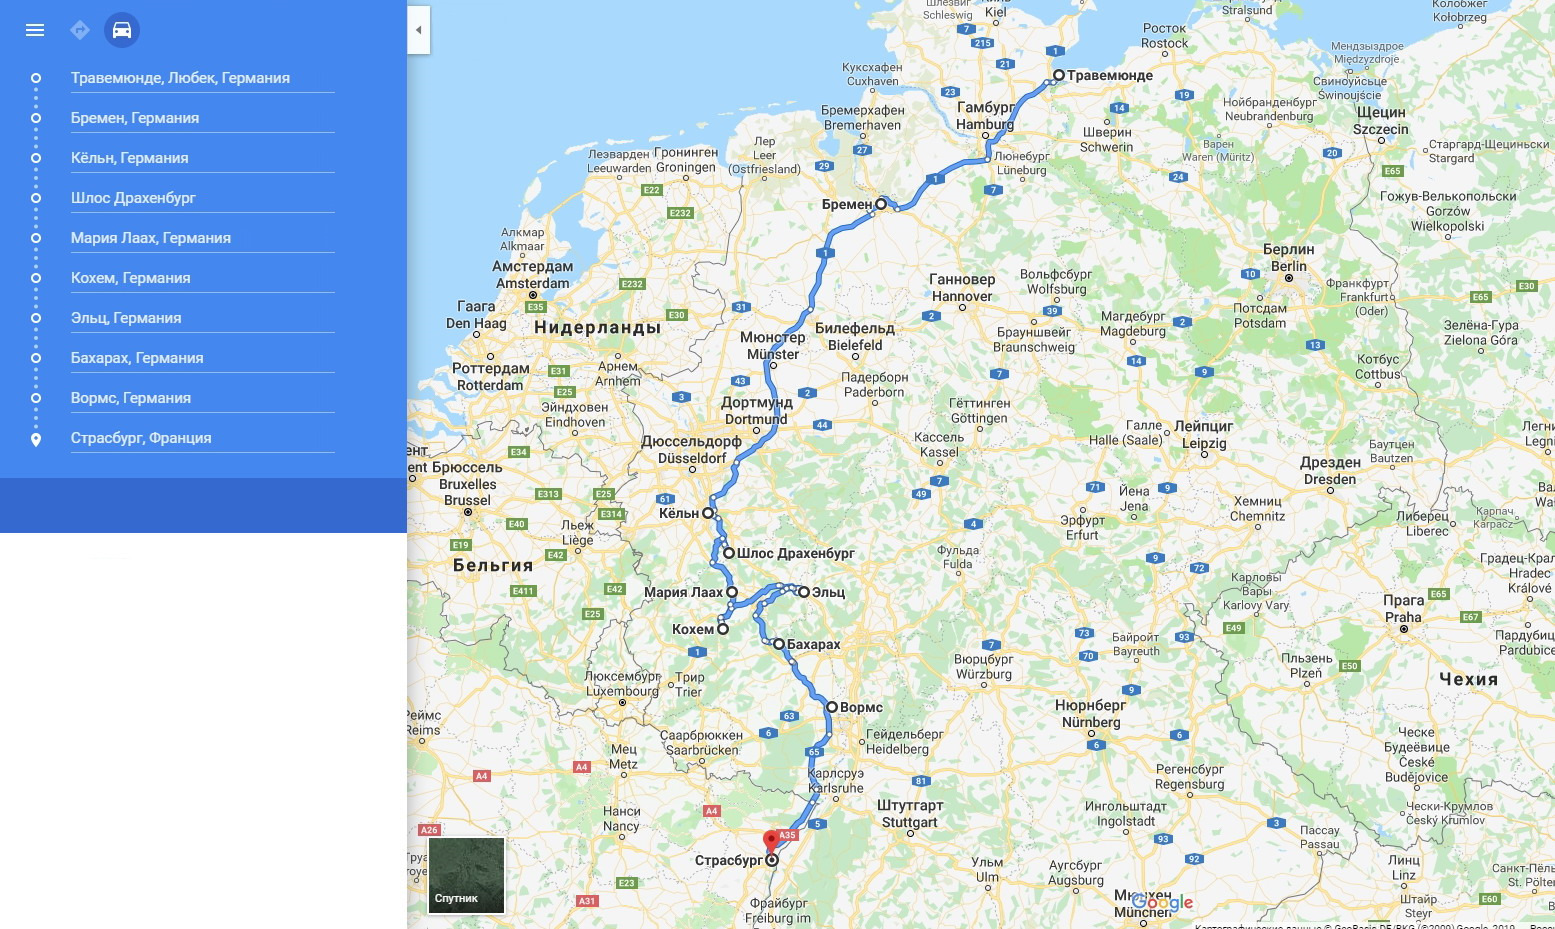 Ганновер на карте. Любек на карте Германии. Аугсбург на карте Германии. Маршрут на карте Германии. Страсбург на карте Германии.